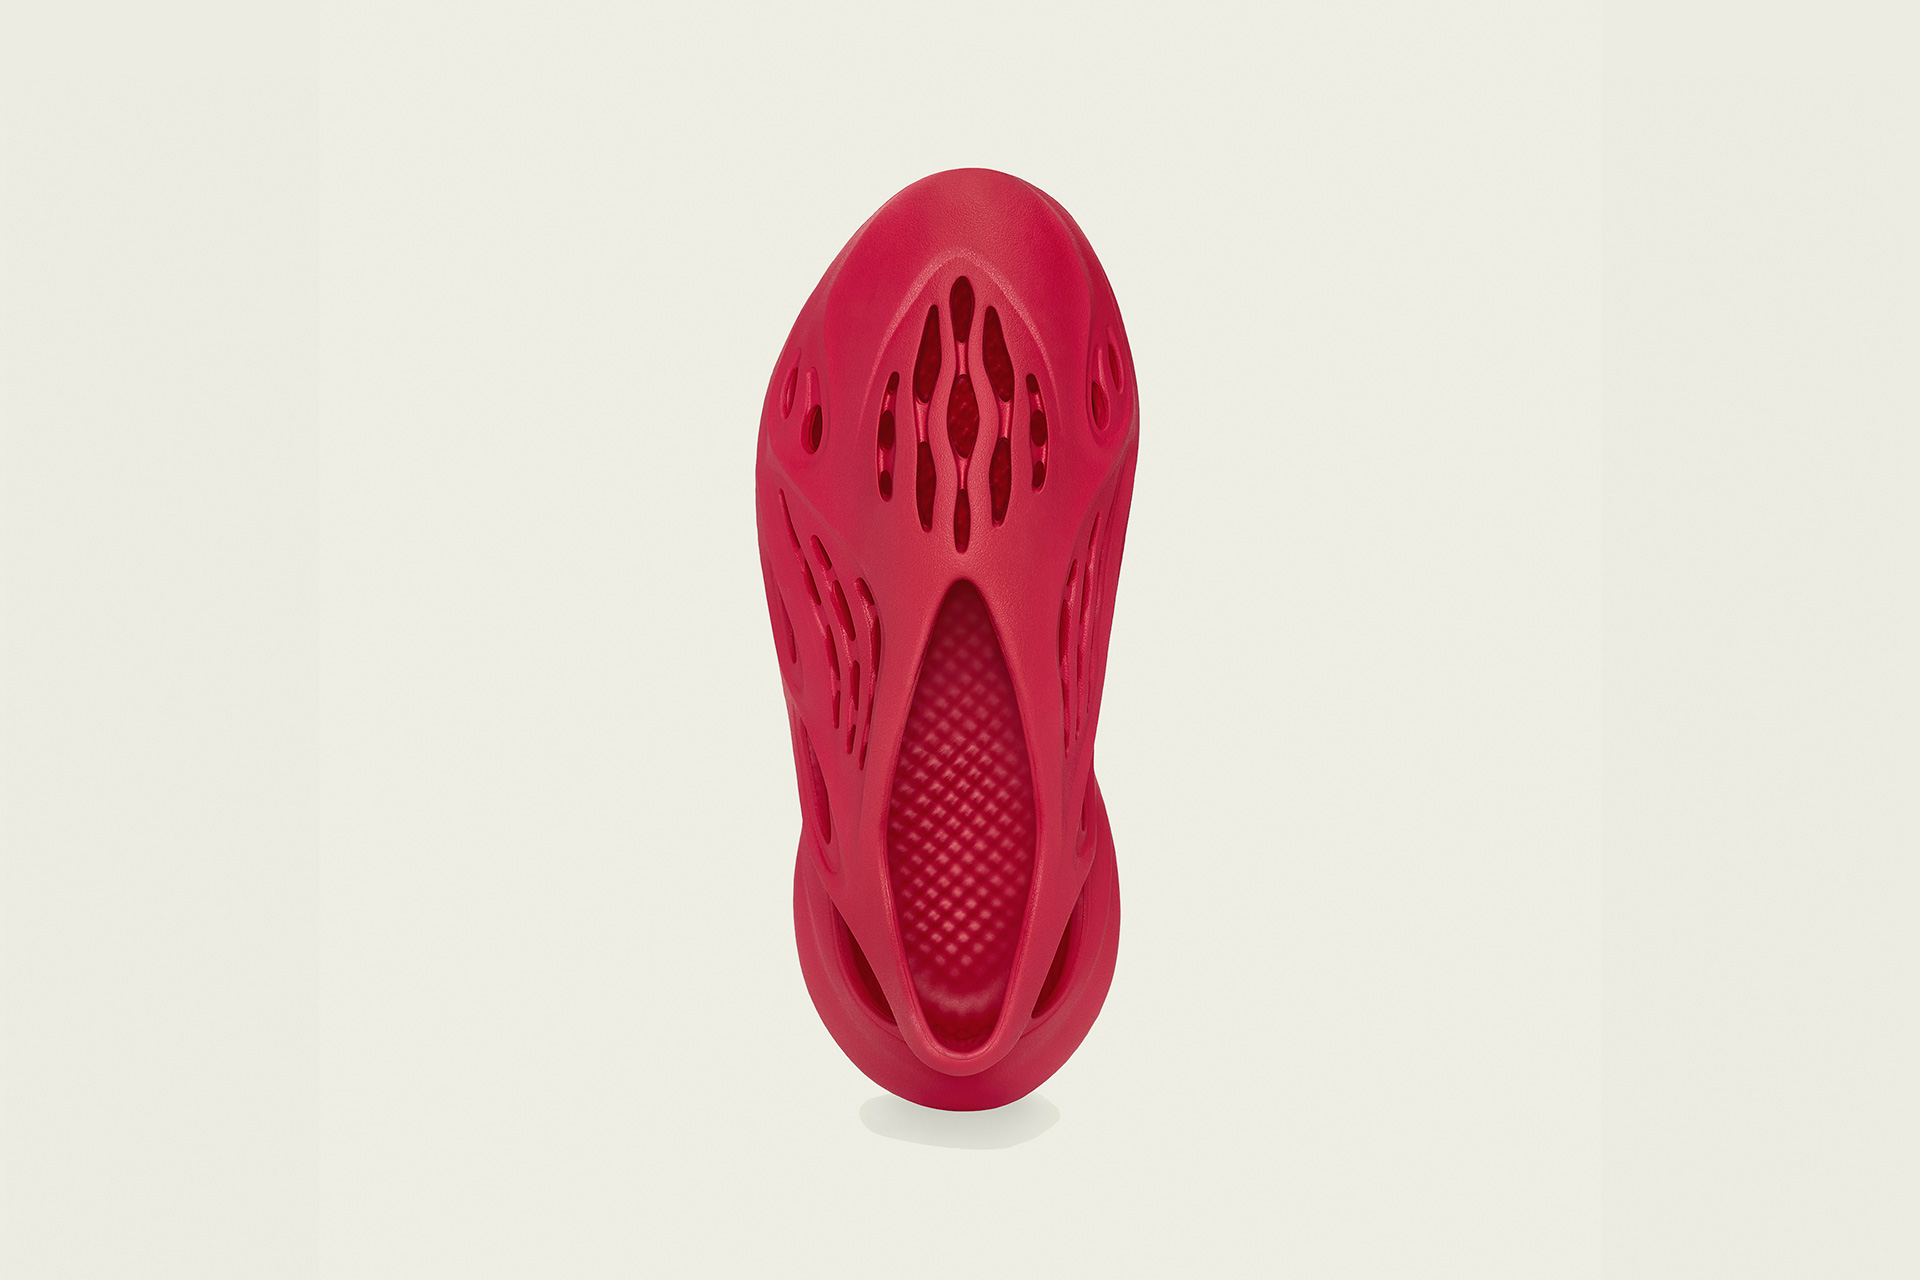 adidas Yeezy Foam Runner - GW3355 - Vermilion - Footshop - Releases